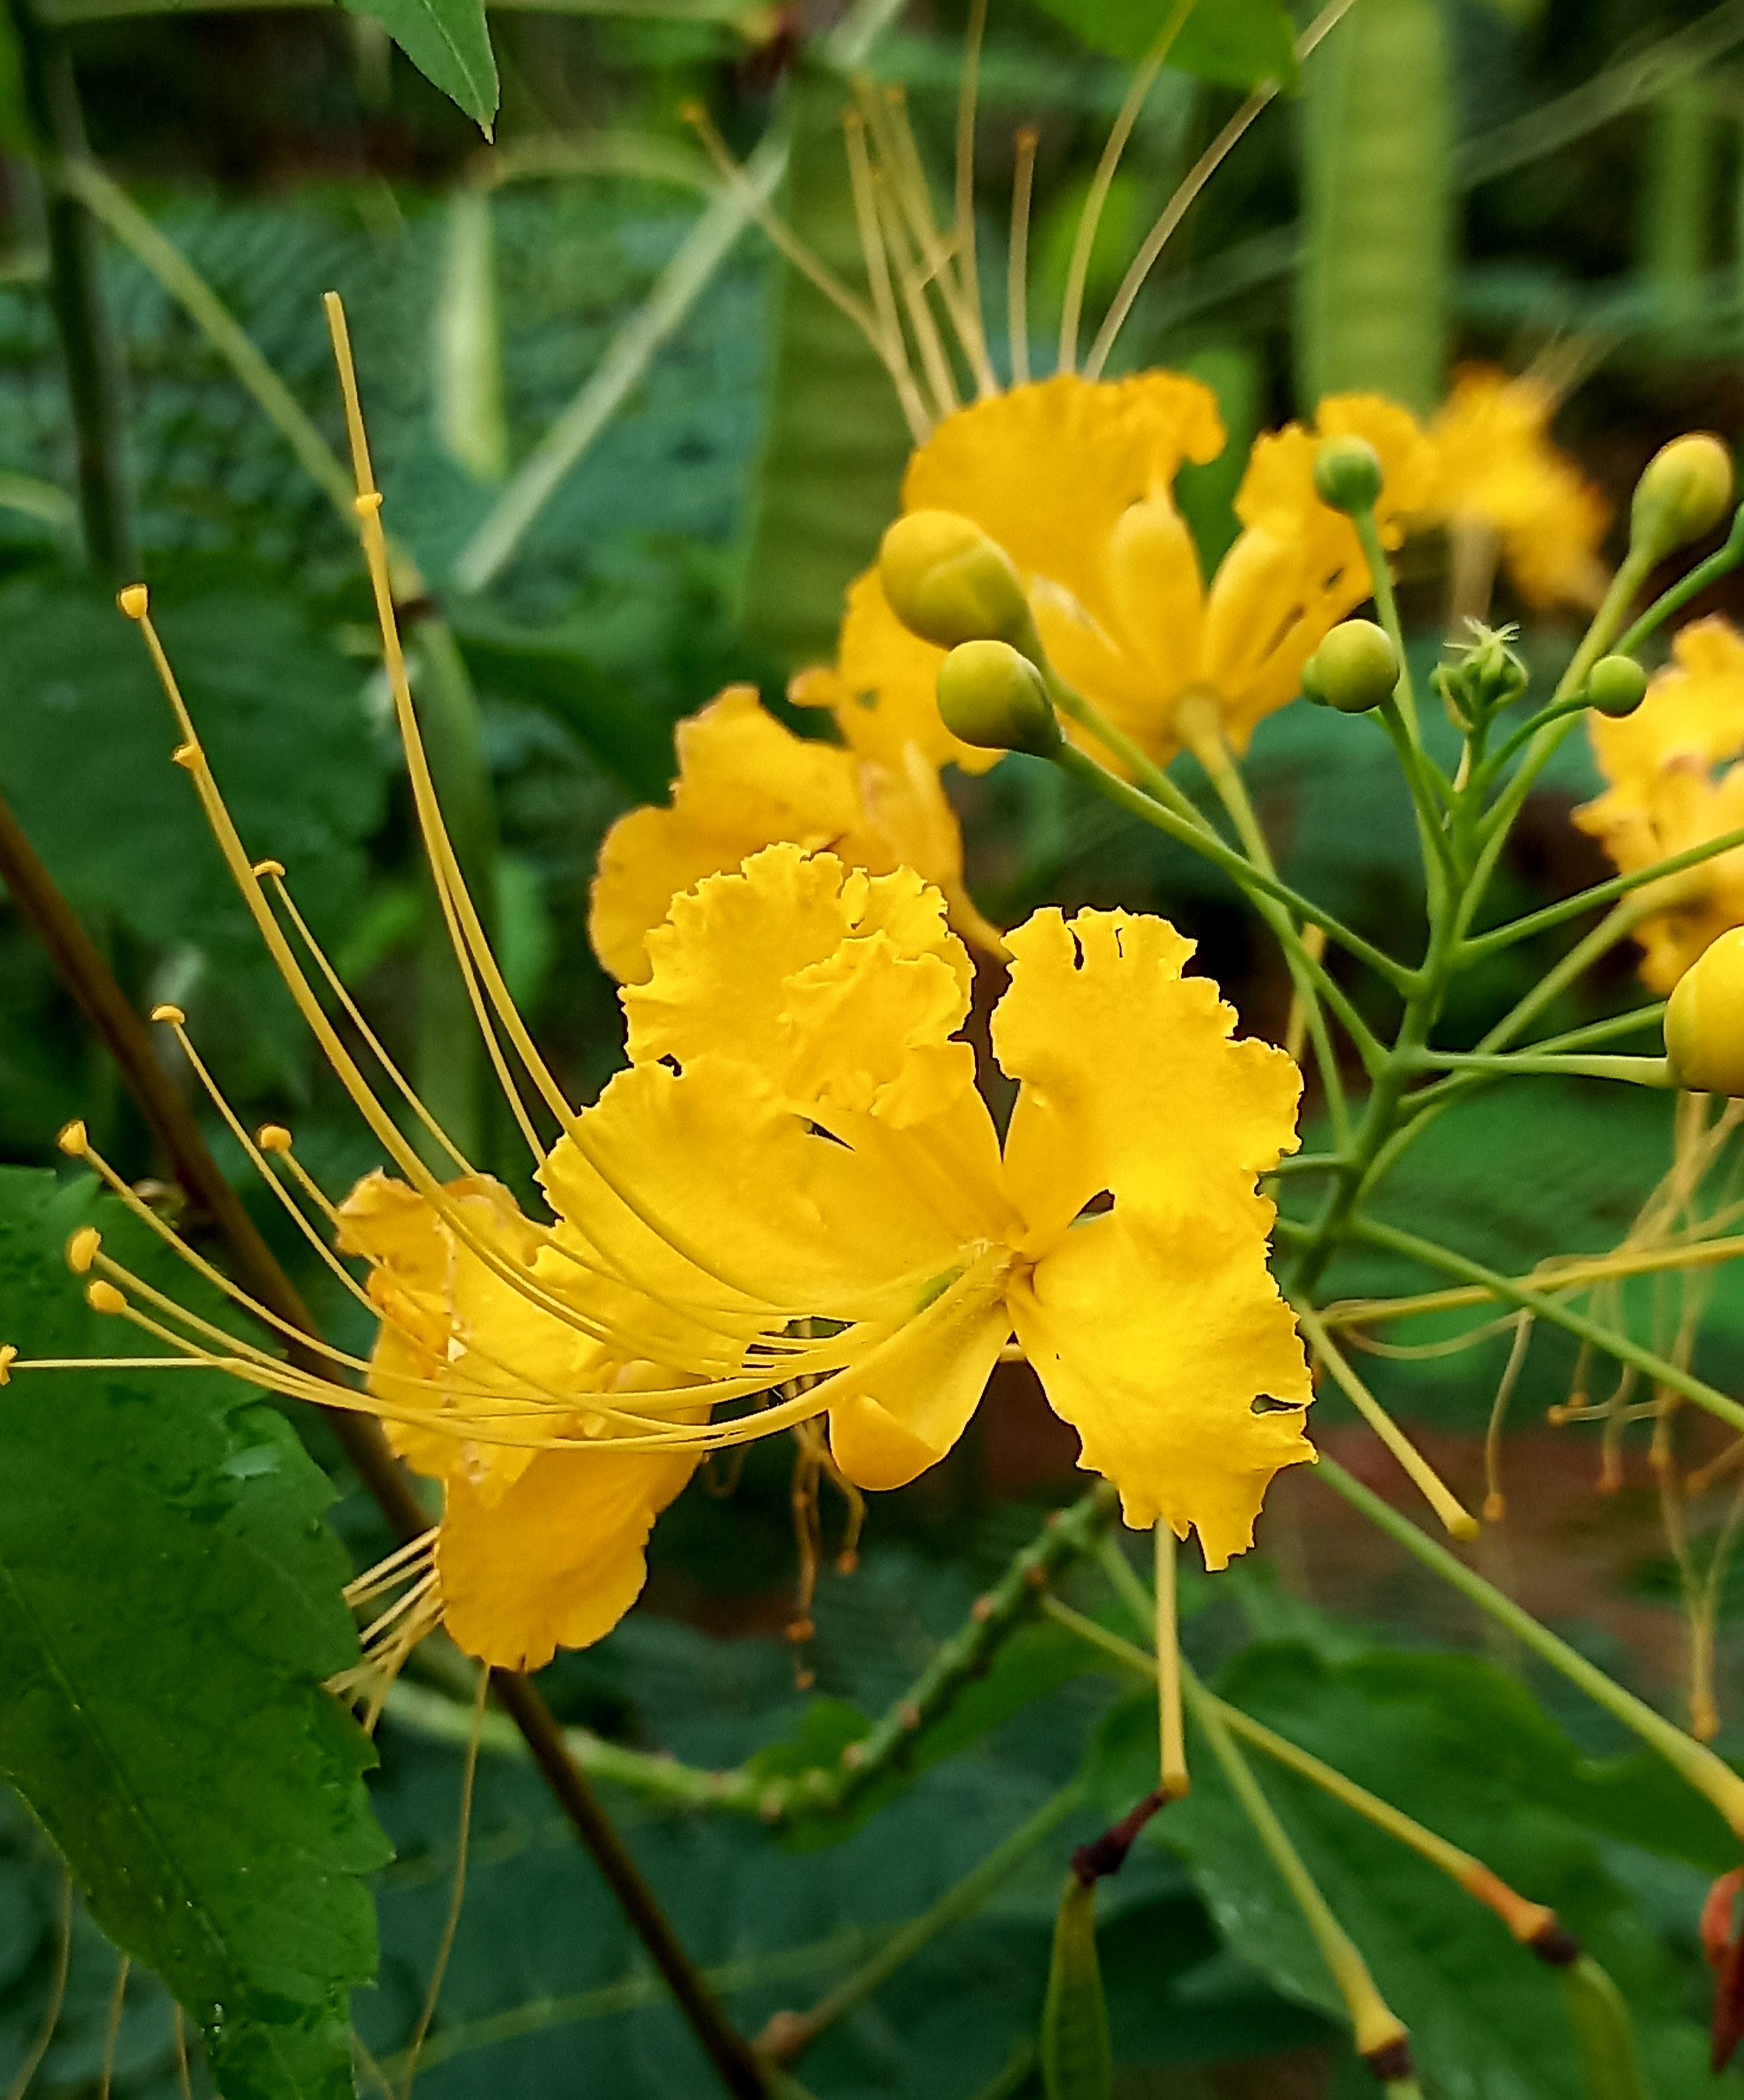 ESP/ENG] Planta de clavellina amarilla/ Yellow carnation plant. — Hive